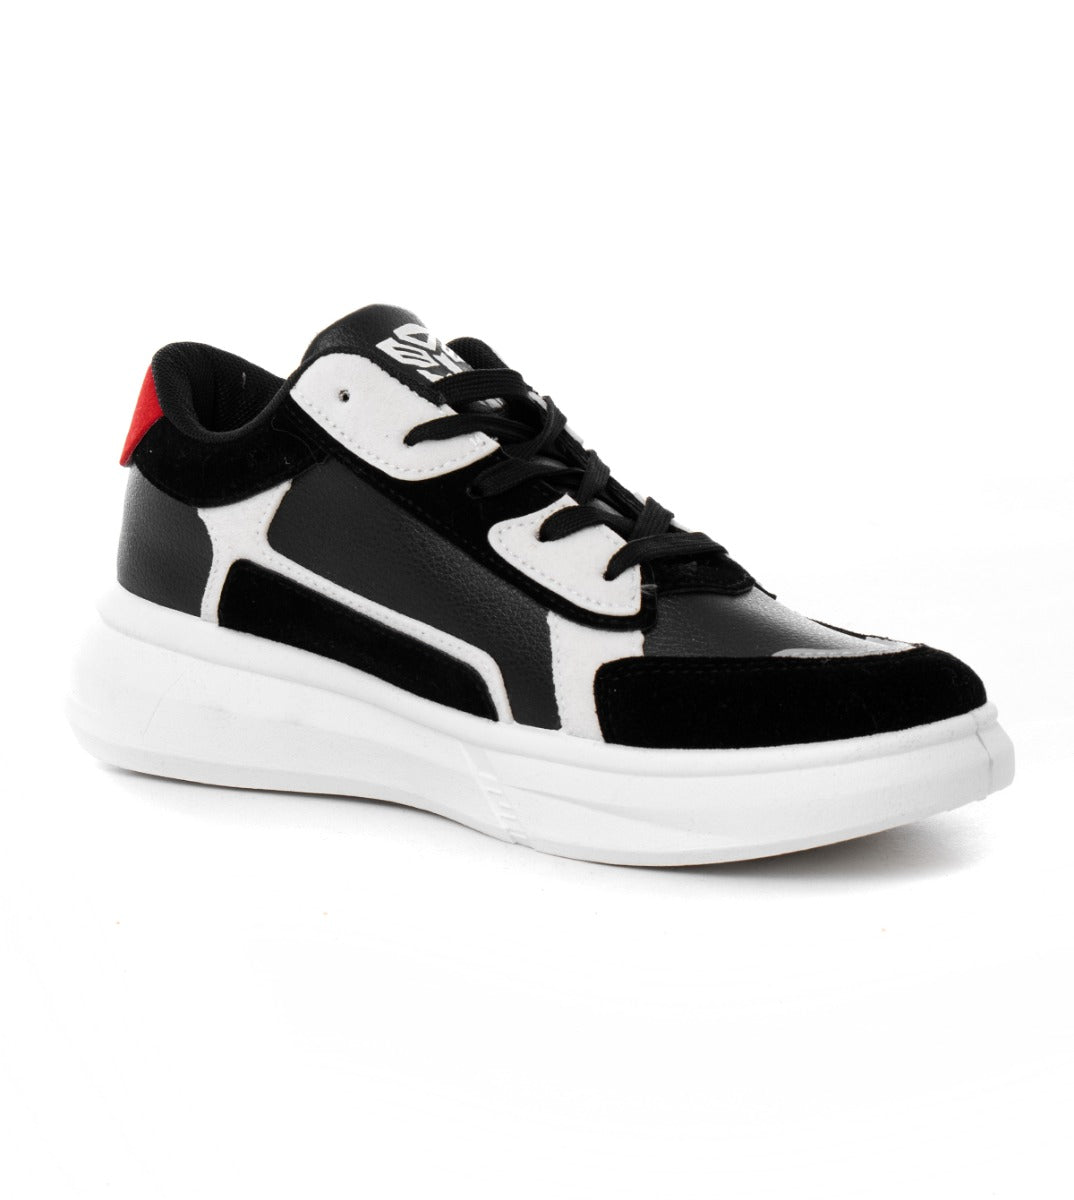 Scarpe Uomo Shoes Sneakers Sportiva Ecopelle Camoscio Nera GIOSAL-S1115A